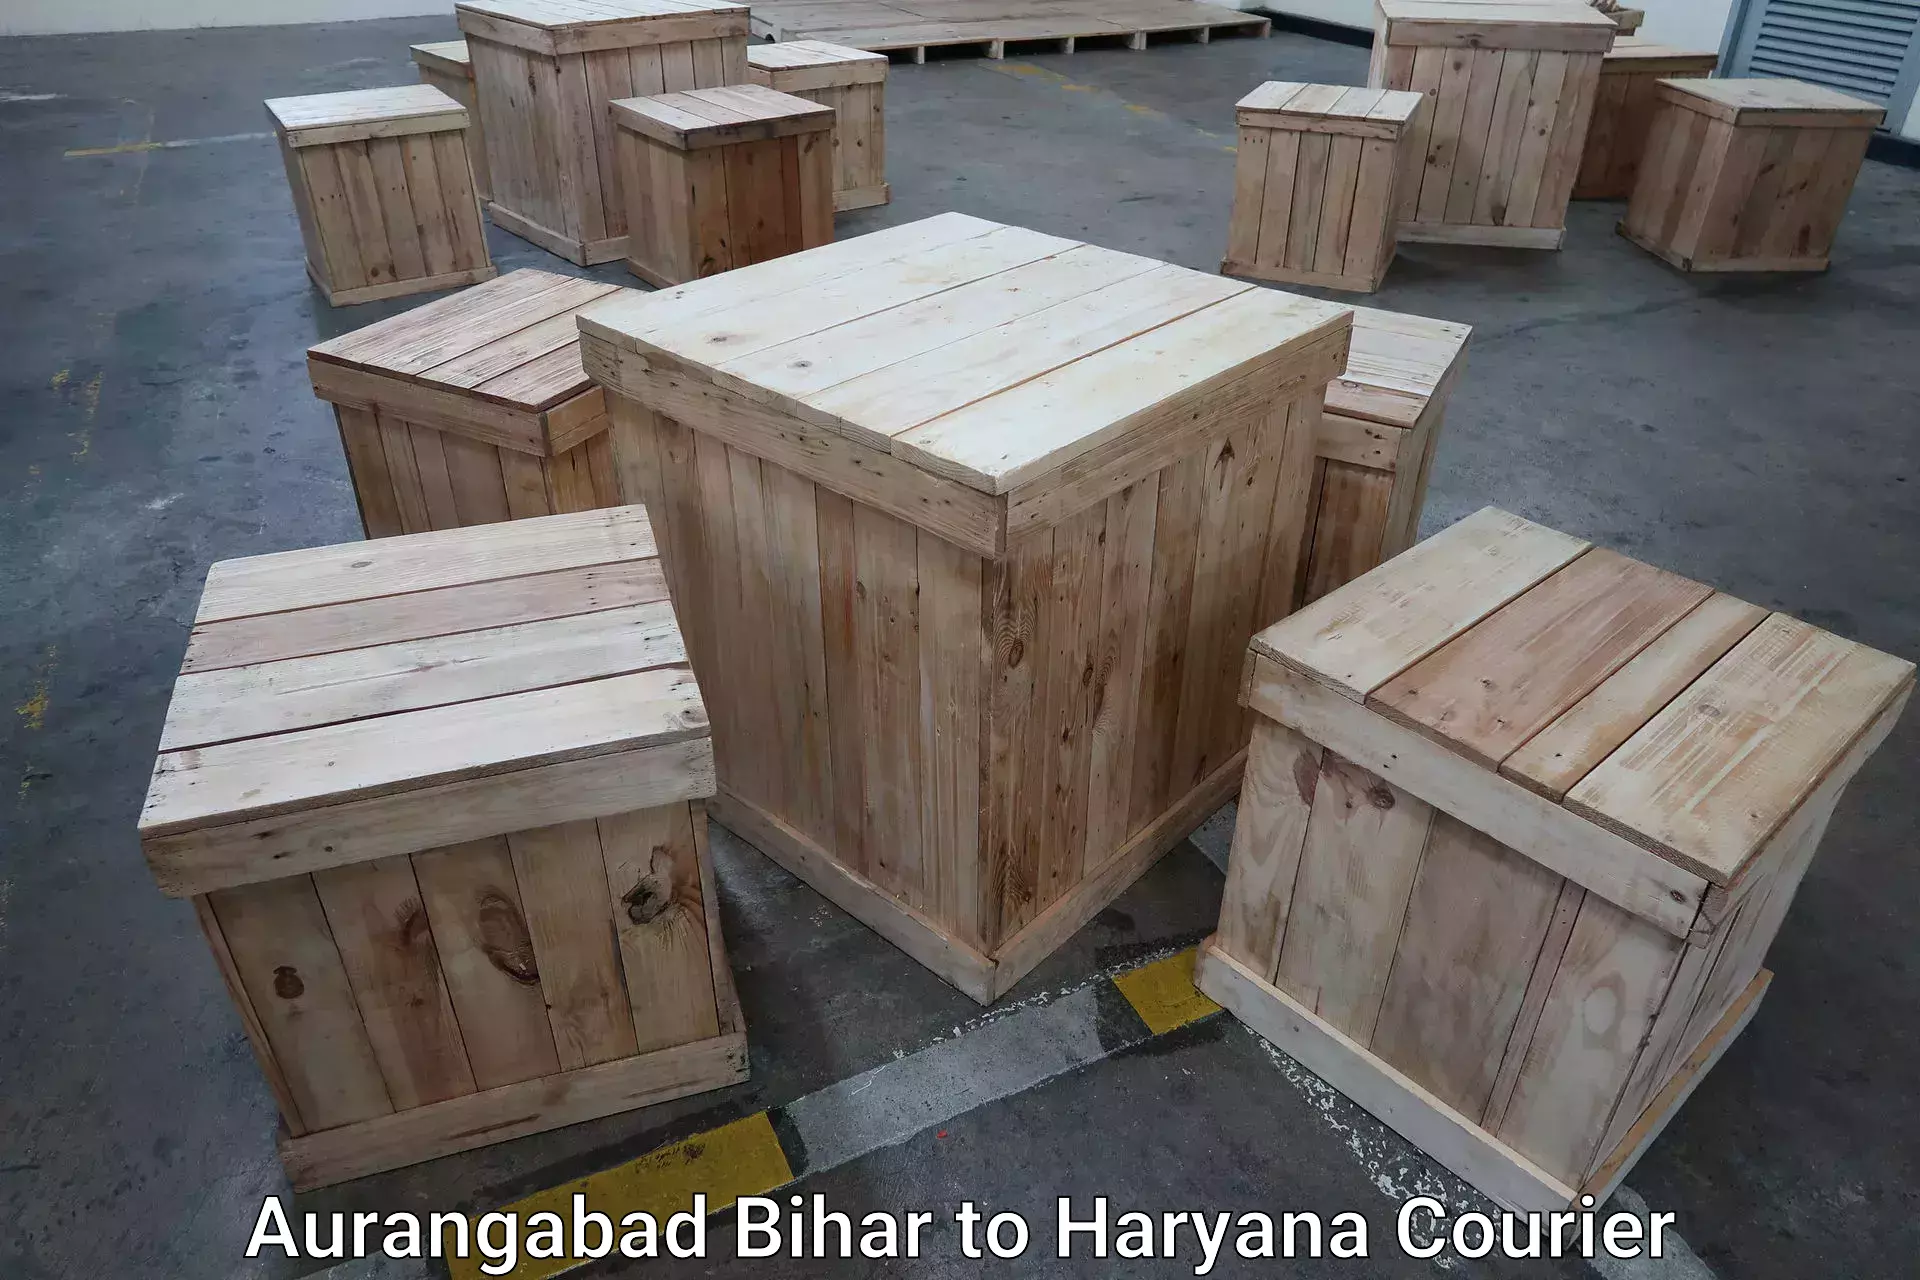 Luggage shipment specialists Aurangabad Bihar to Kurukshetra University